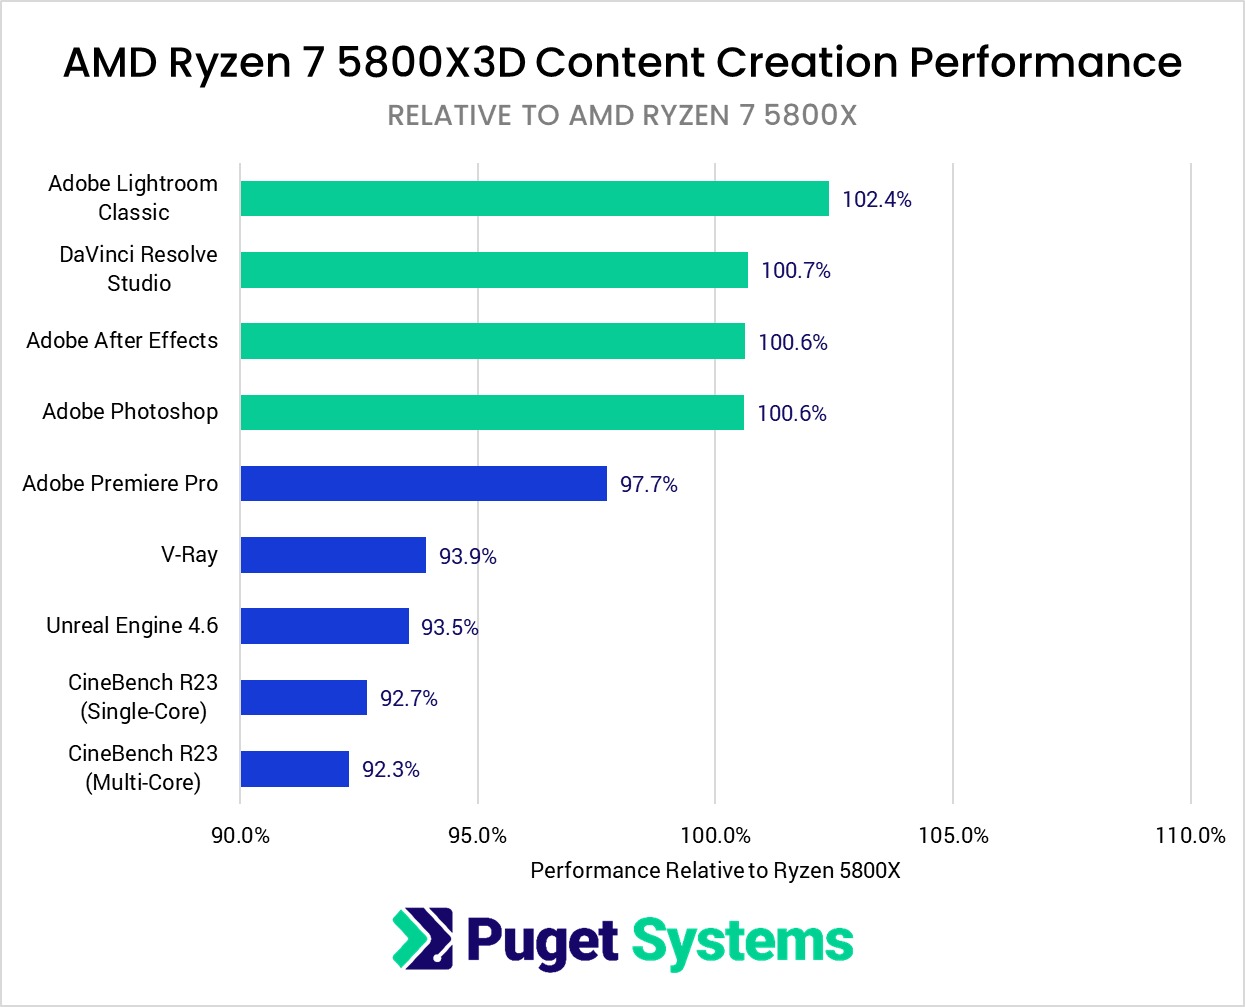 AMD Ryzen 7 5800X3D vs Ryzen 5800X for Content Creation Video Photo Rendering Performance